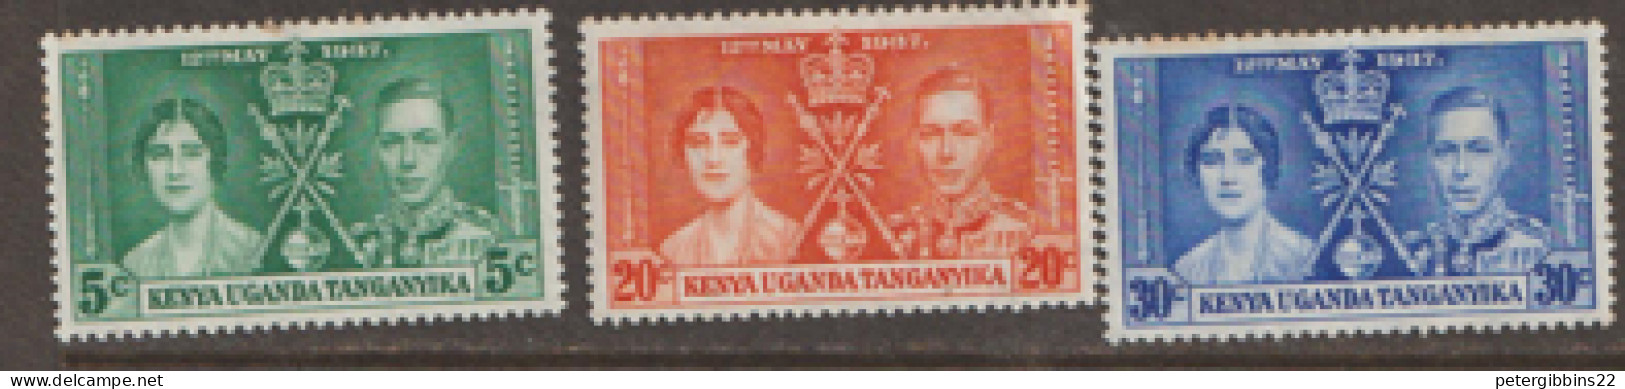 Kenya  Uganda & Tanganyika   1937  SG  128-30 Coronation  Mounted Mint - Kenya, Uganda & Tanganyika